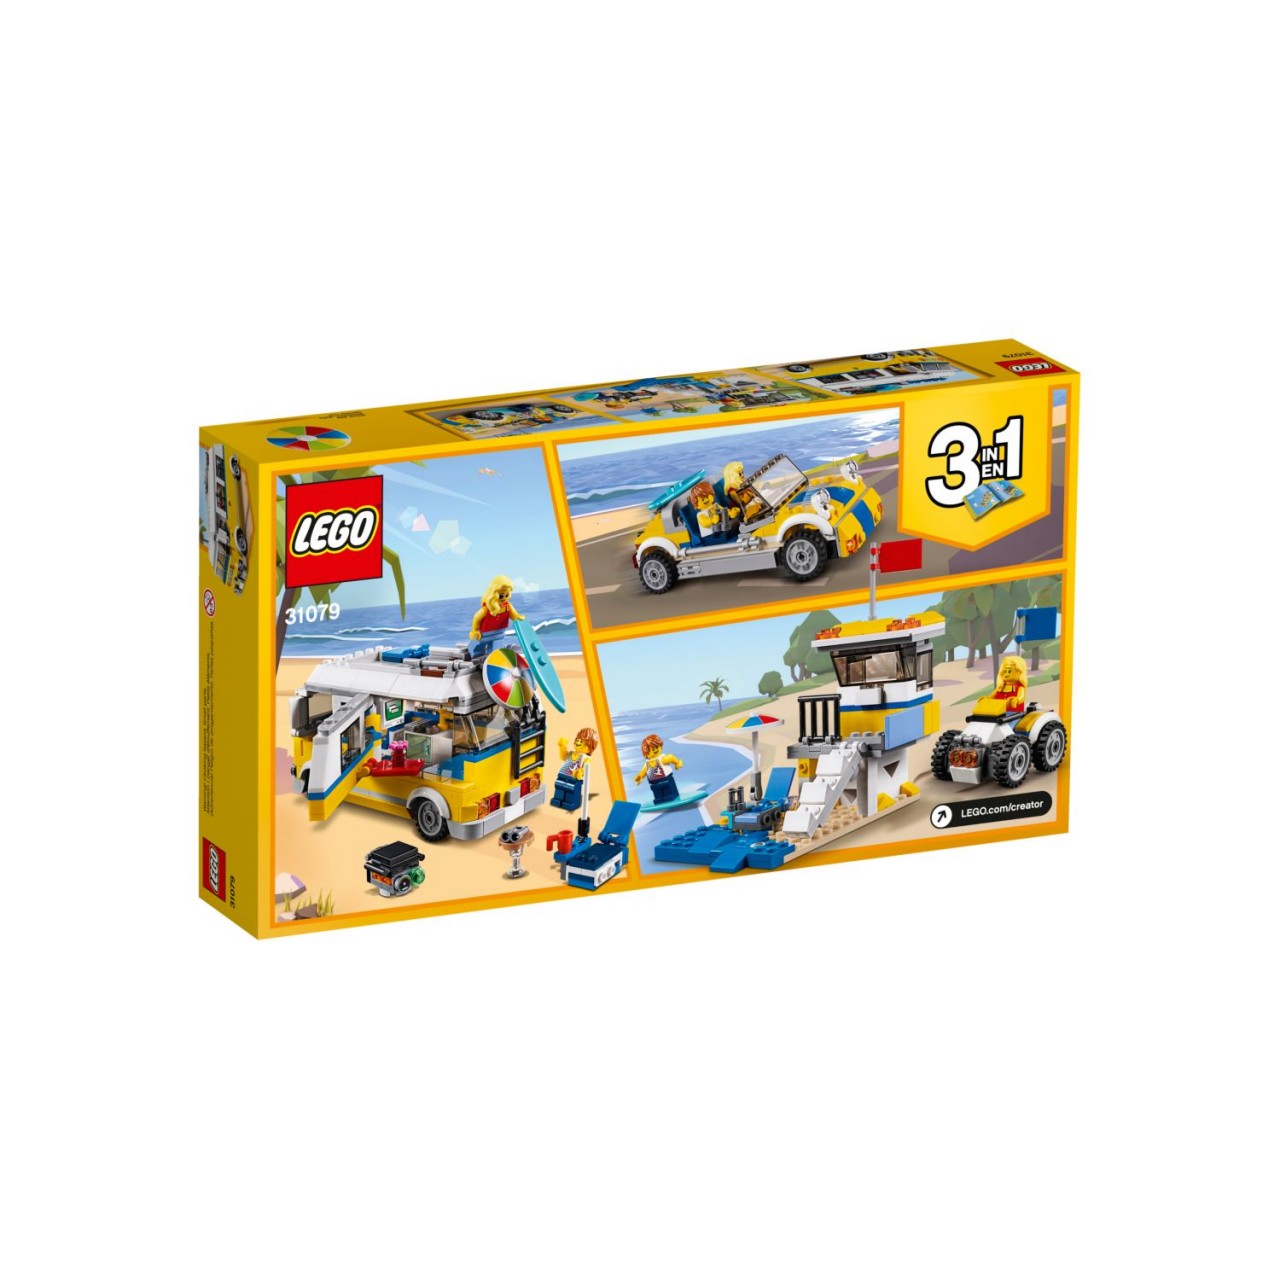 LEGO CREATOR 31079 Surfermobil